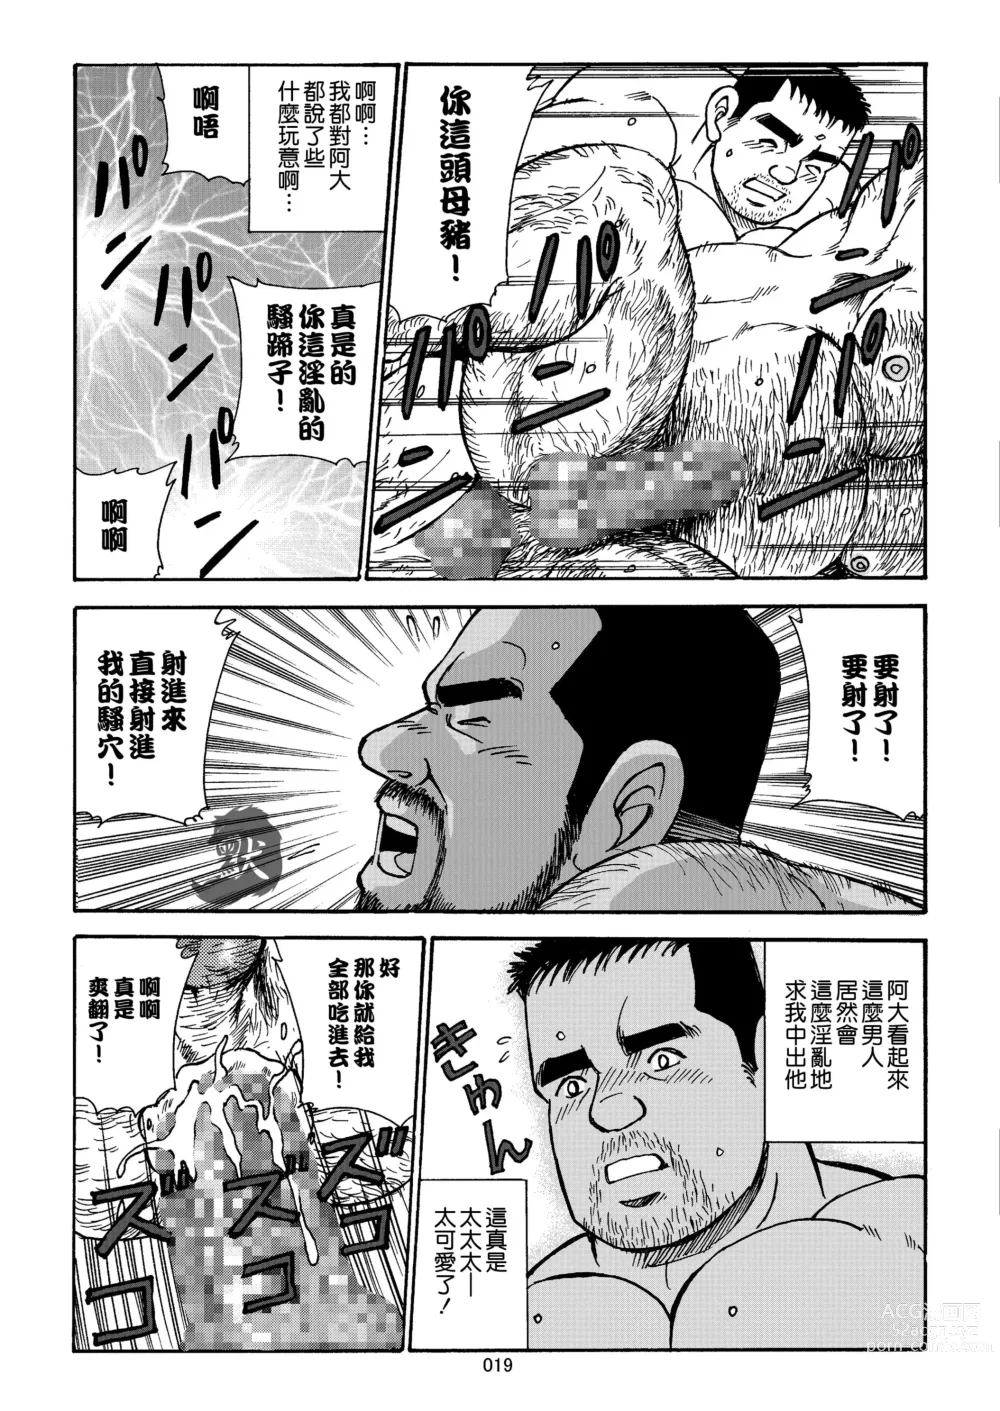 Page 19 of manga おいしい性活